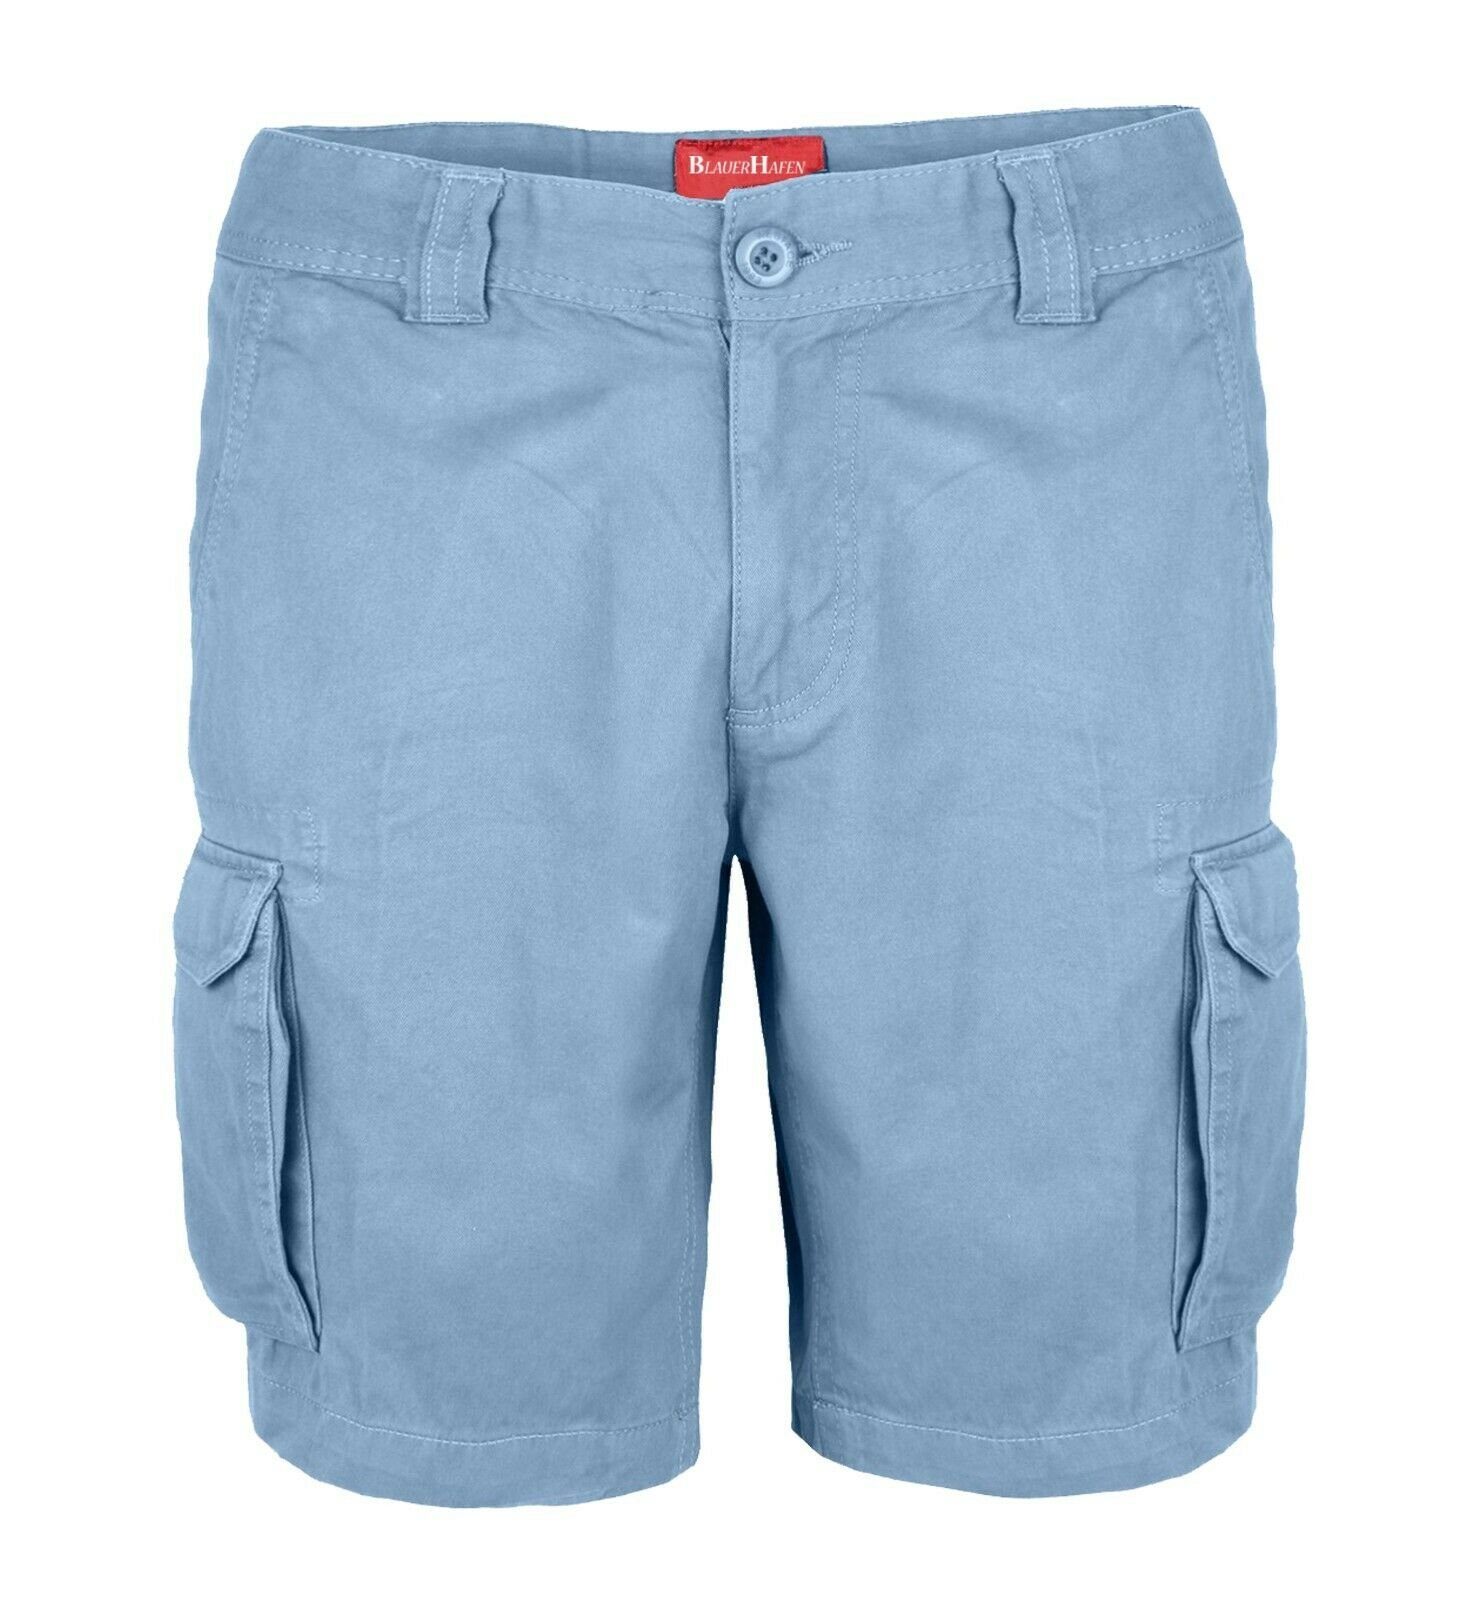 BlauerHafen Cargoshorts Herren Cargo Shorts 100% Baumwolle Hose Normale Passform Bermuda Himmelblau